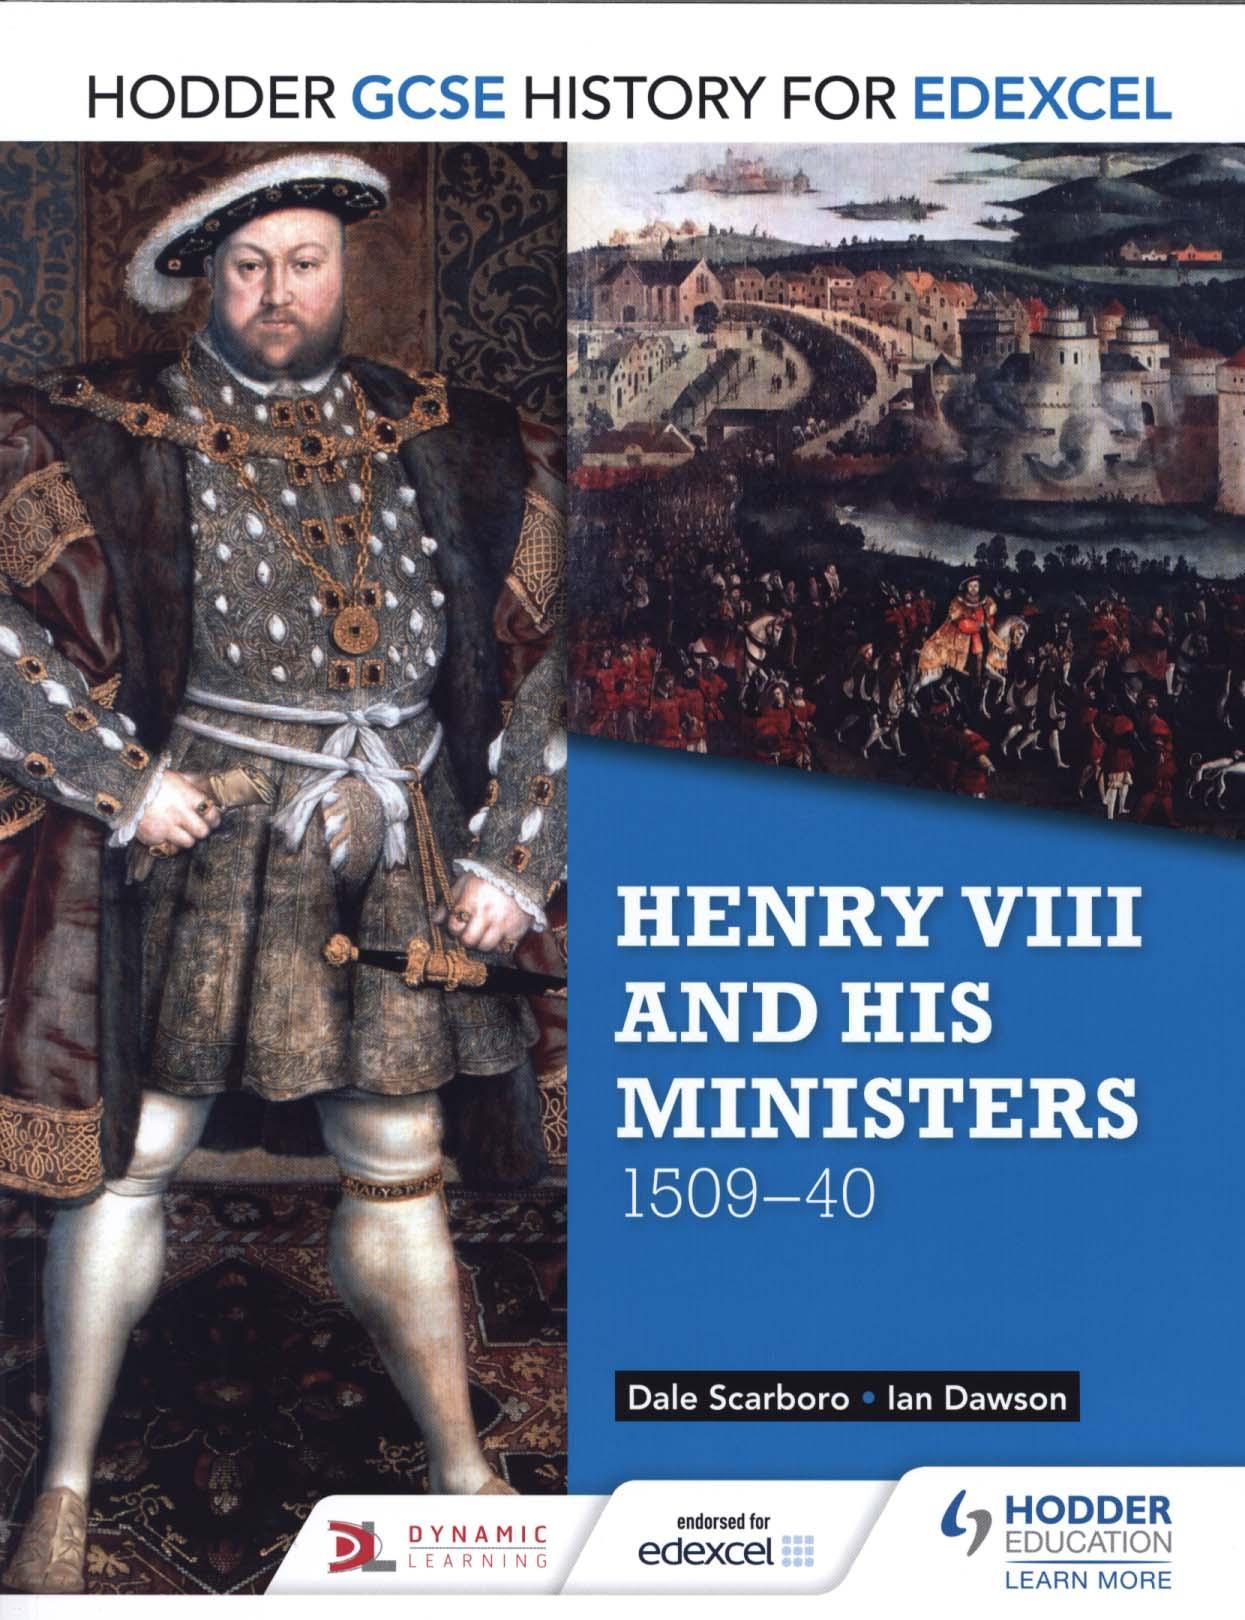 Hodder GCSE History for Edexcel: Henry VIII and His Minister